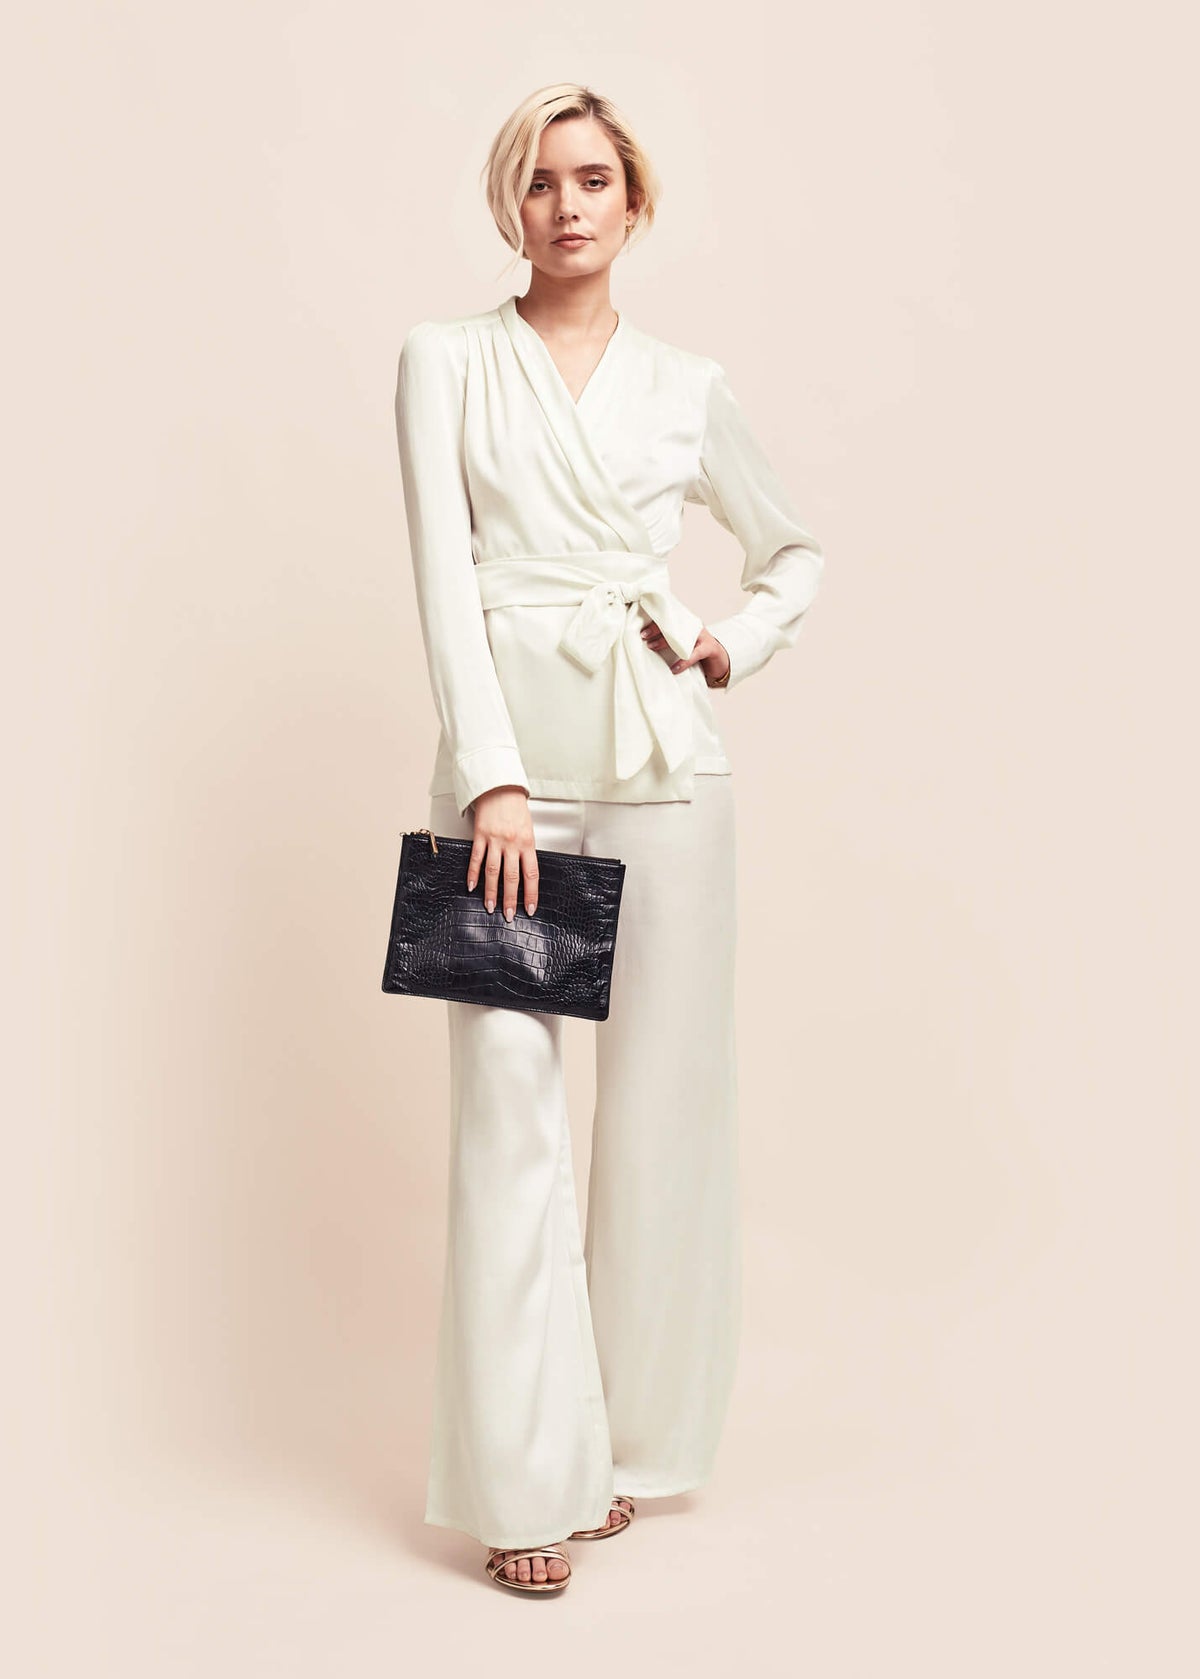 Roxy Eva Pearl Silk Satin Suit with flare pant - MAIMIE LONDON